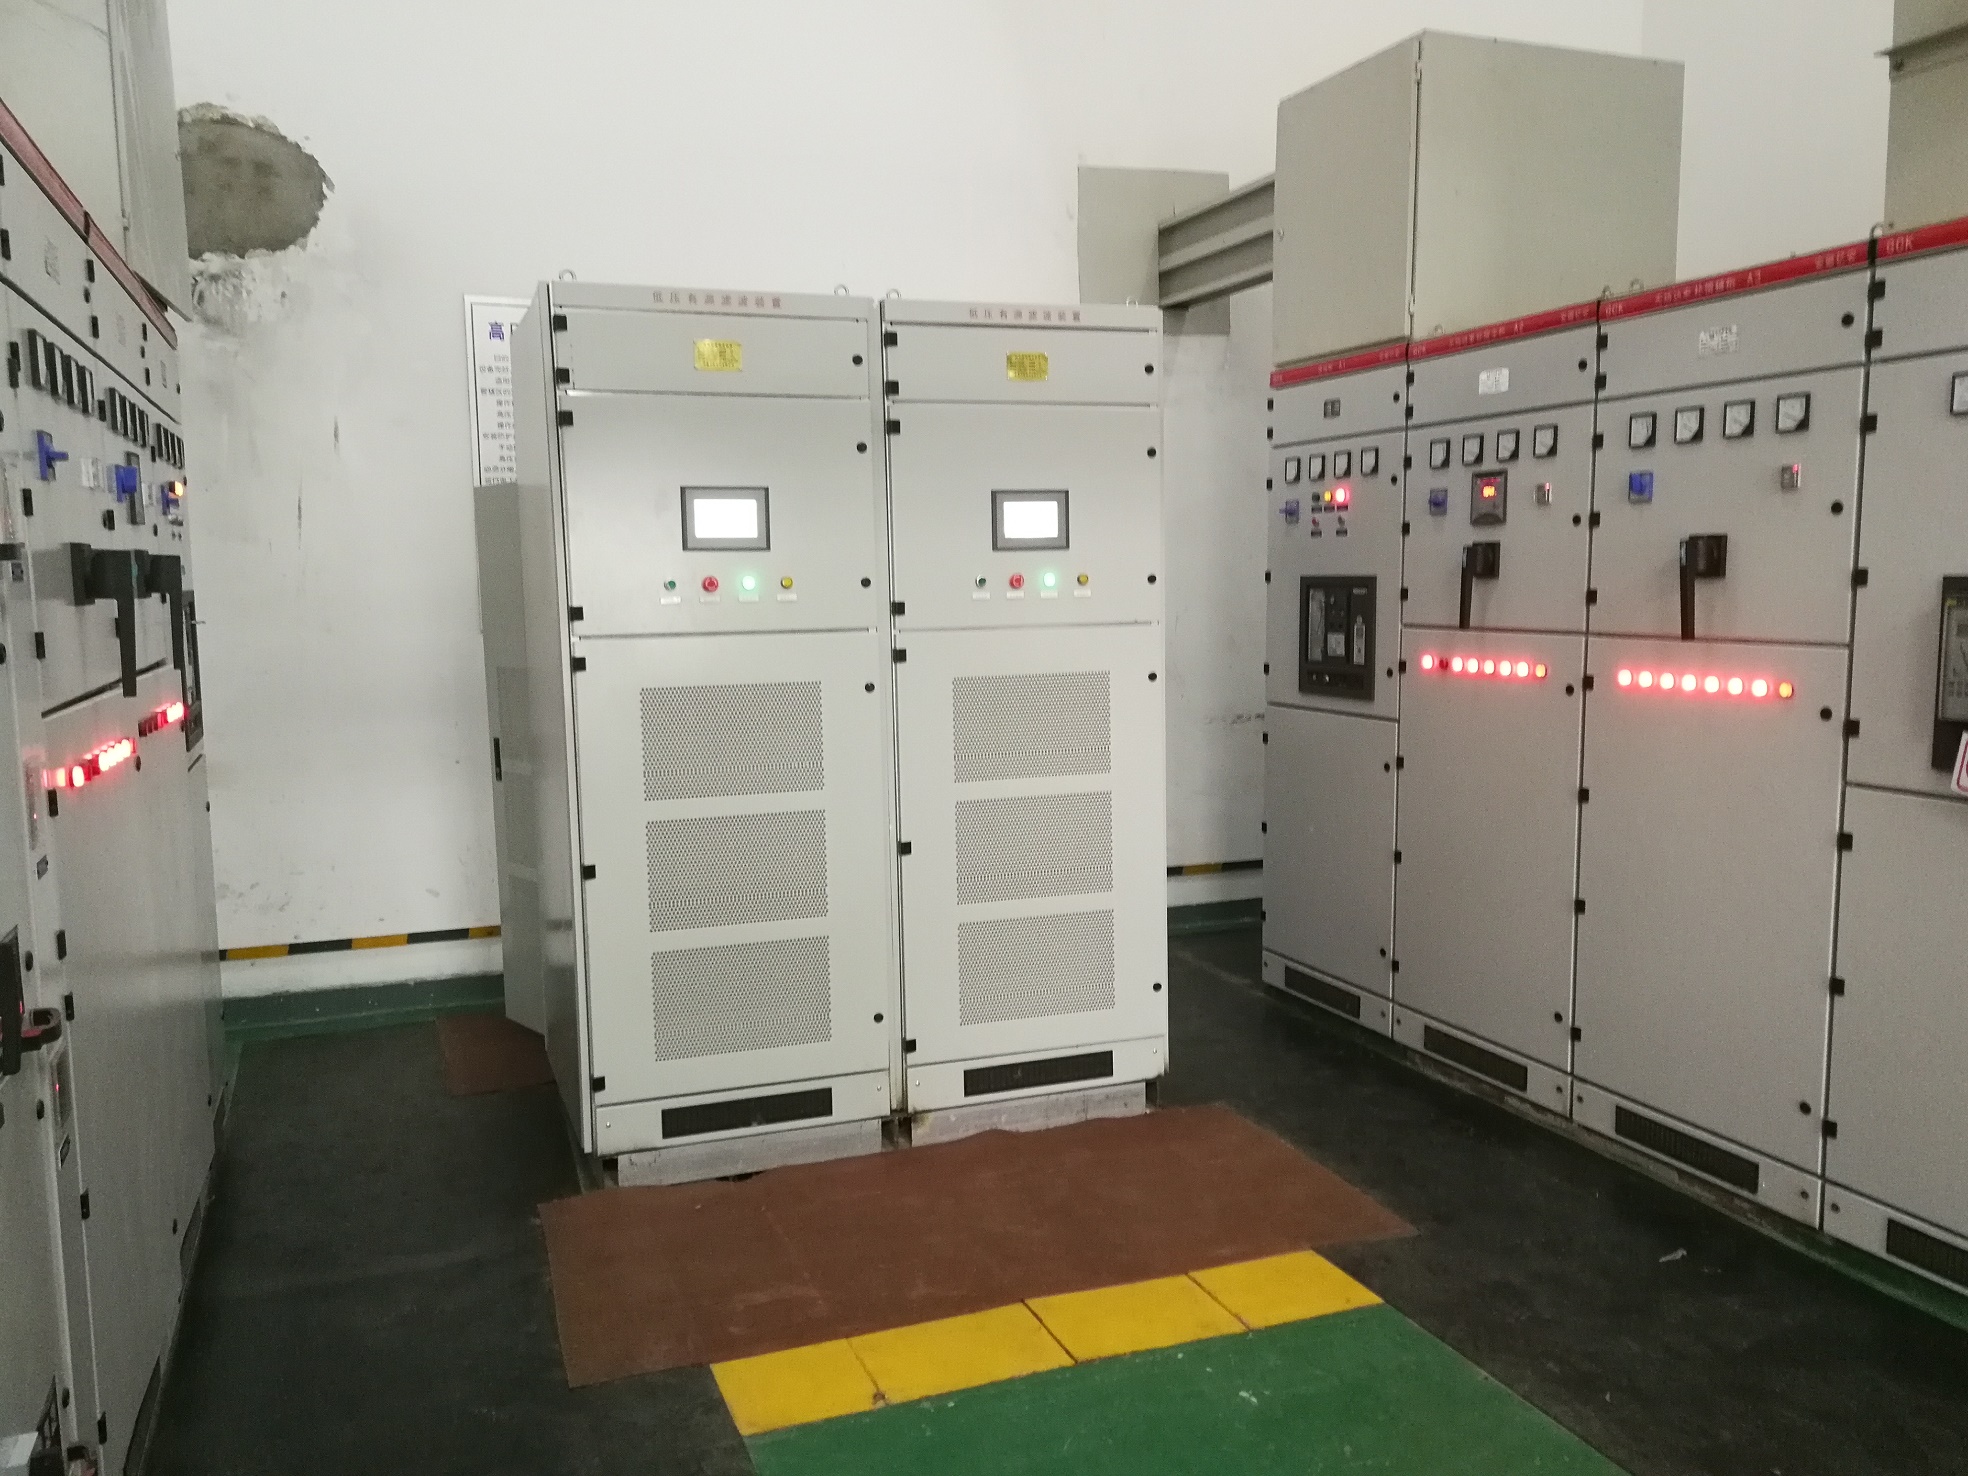 ZDDQ Static Var Generator Panels at site